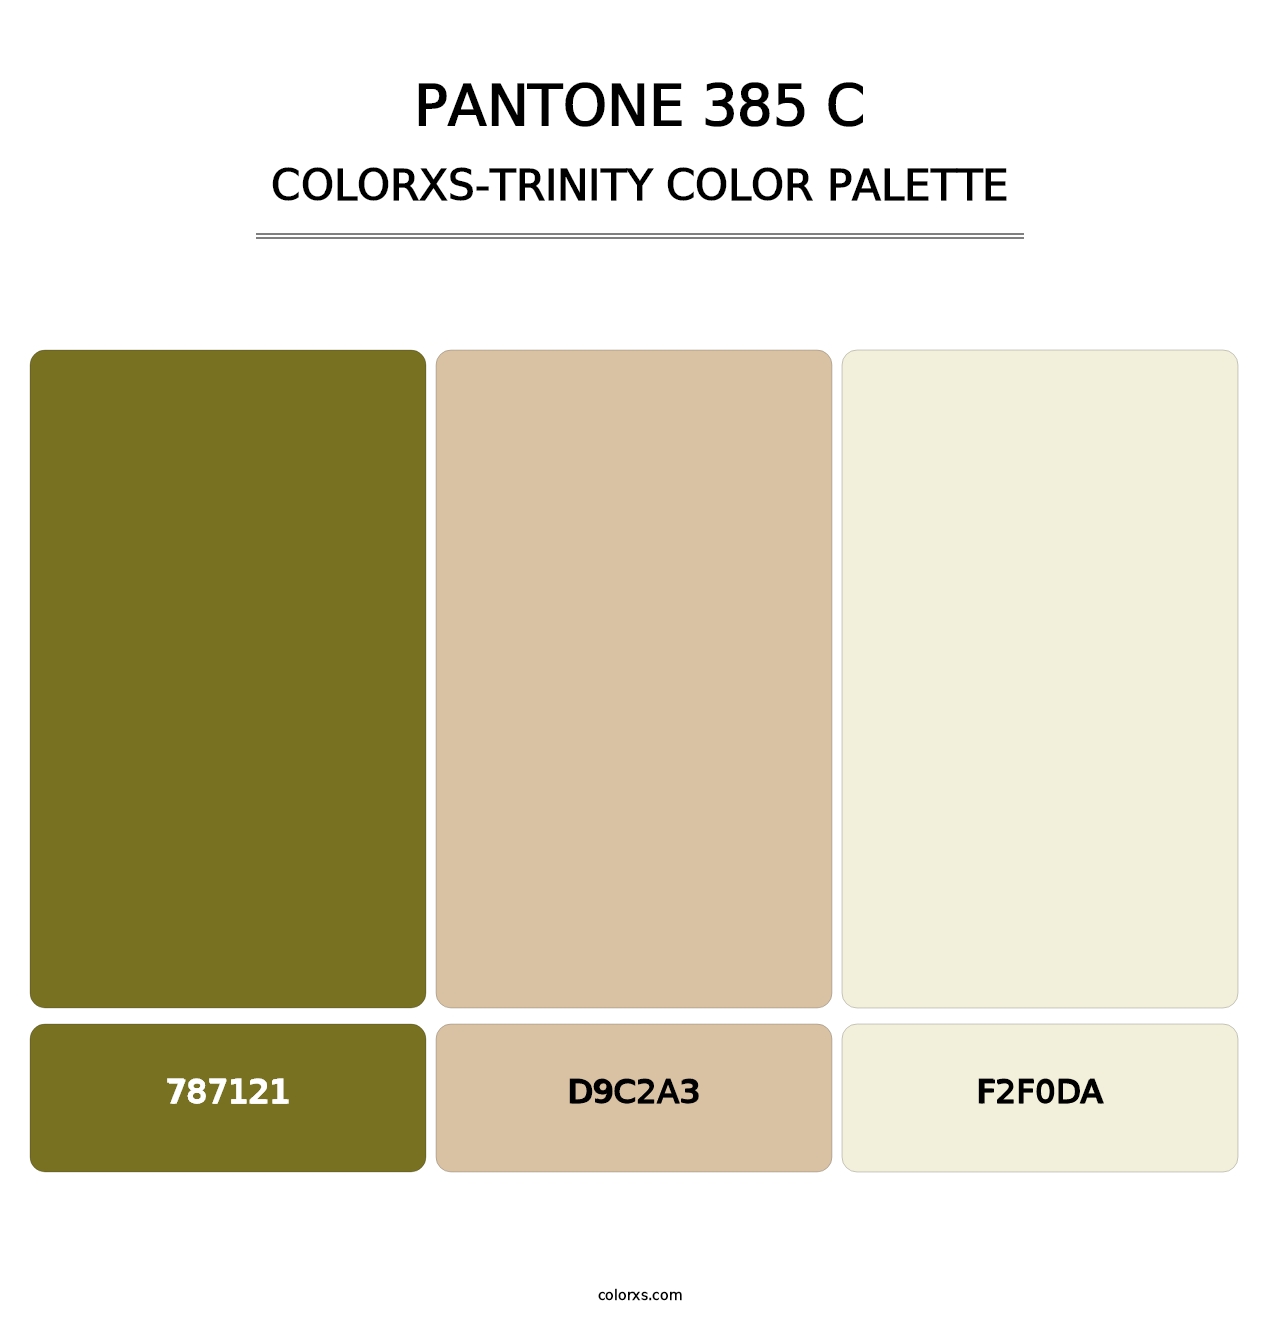 PANTONE 385 C - Colorxs Trinity Palette